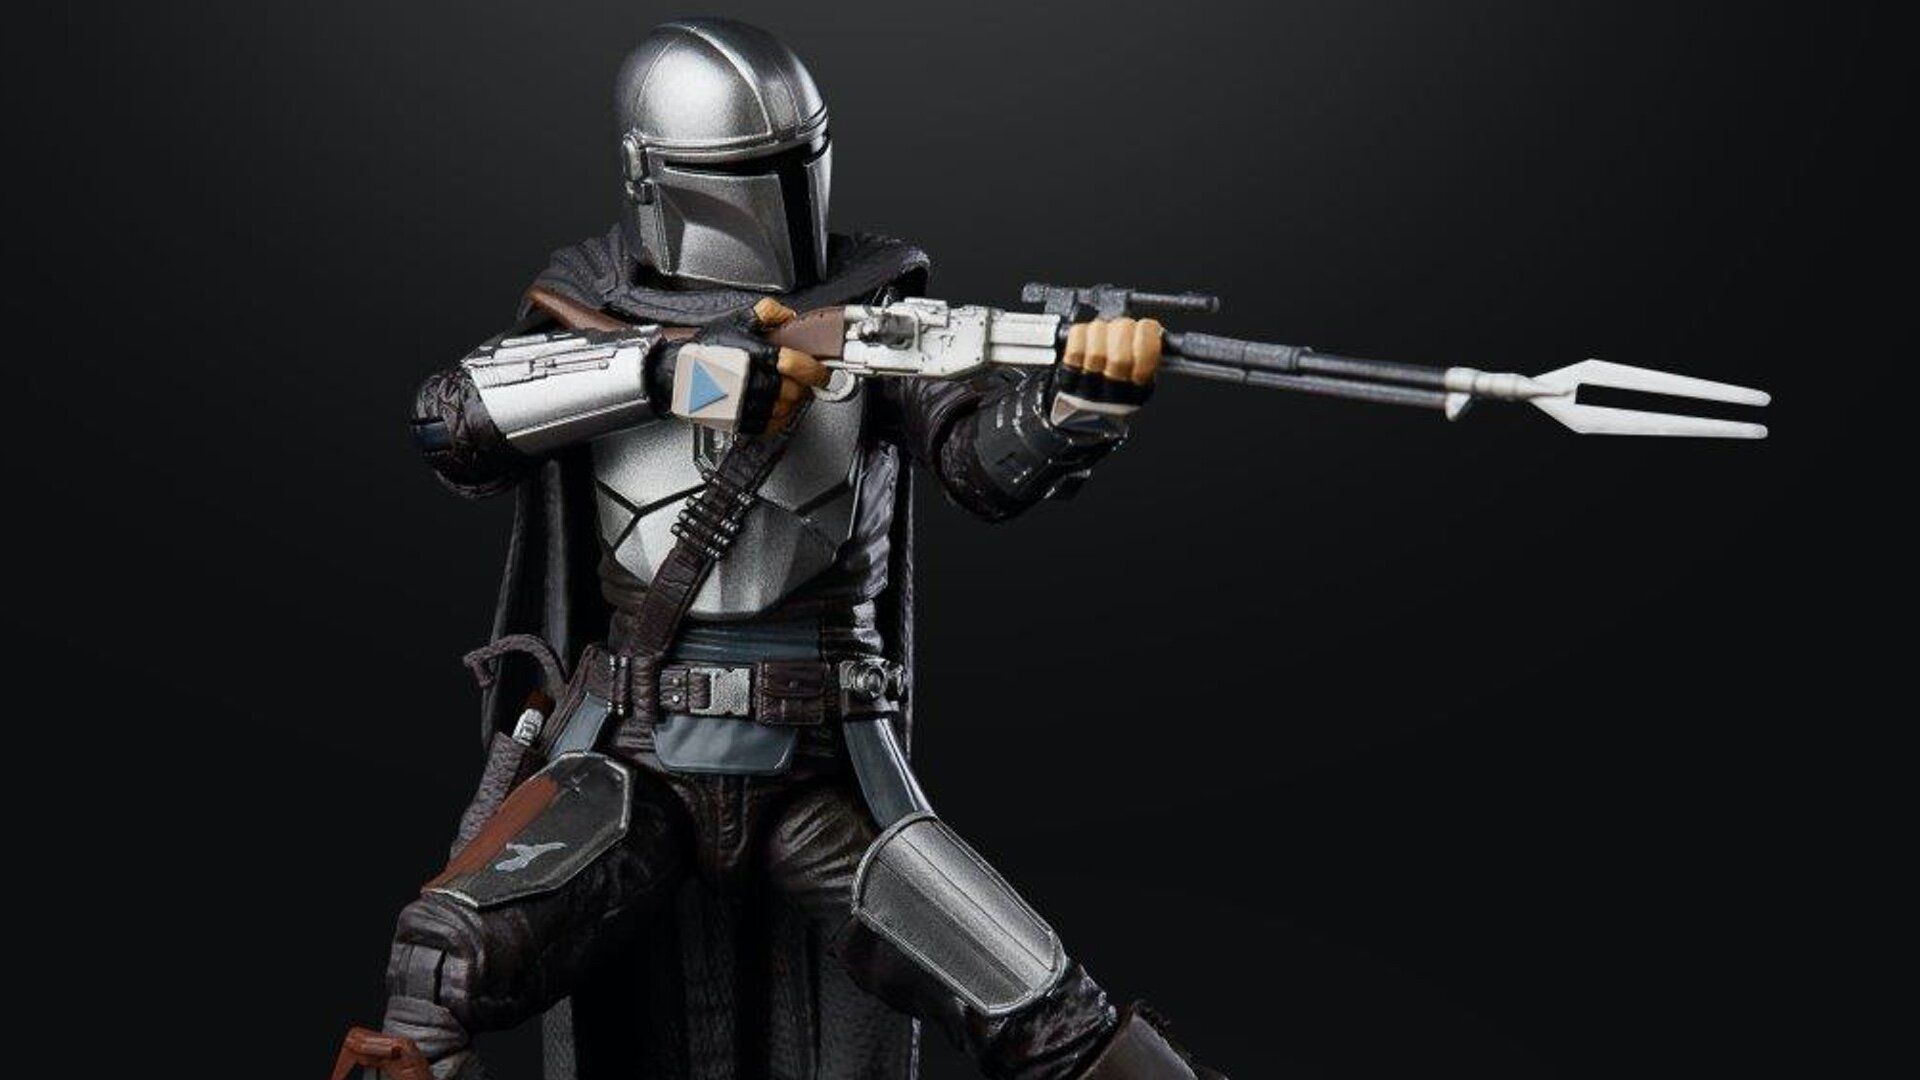 New STAR WARS Black Series Figure of THE MANDALORIAN Wearing His Beskar Armor